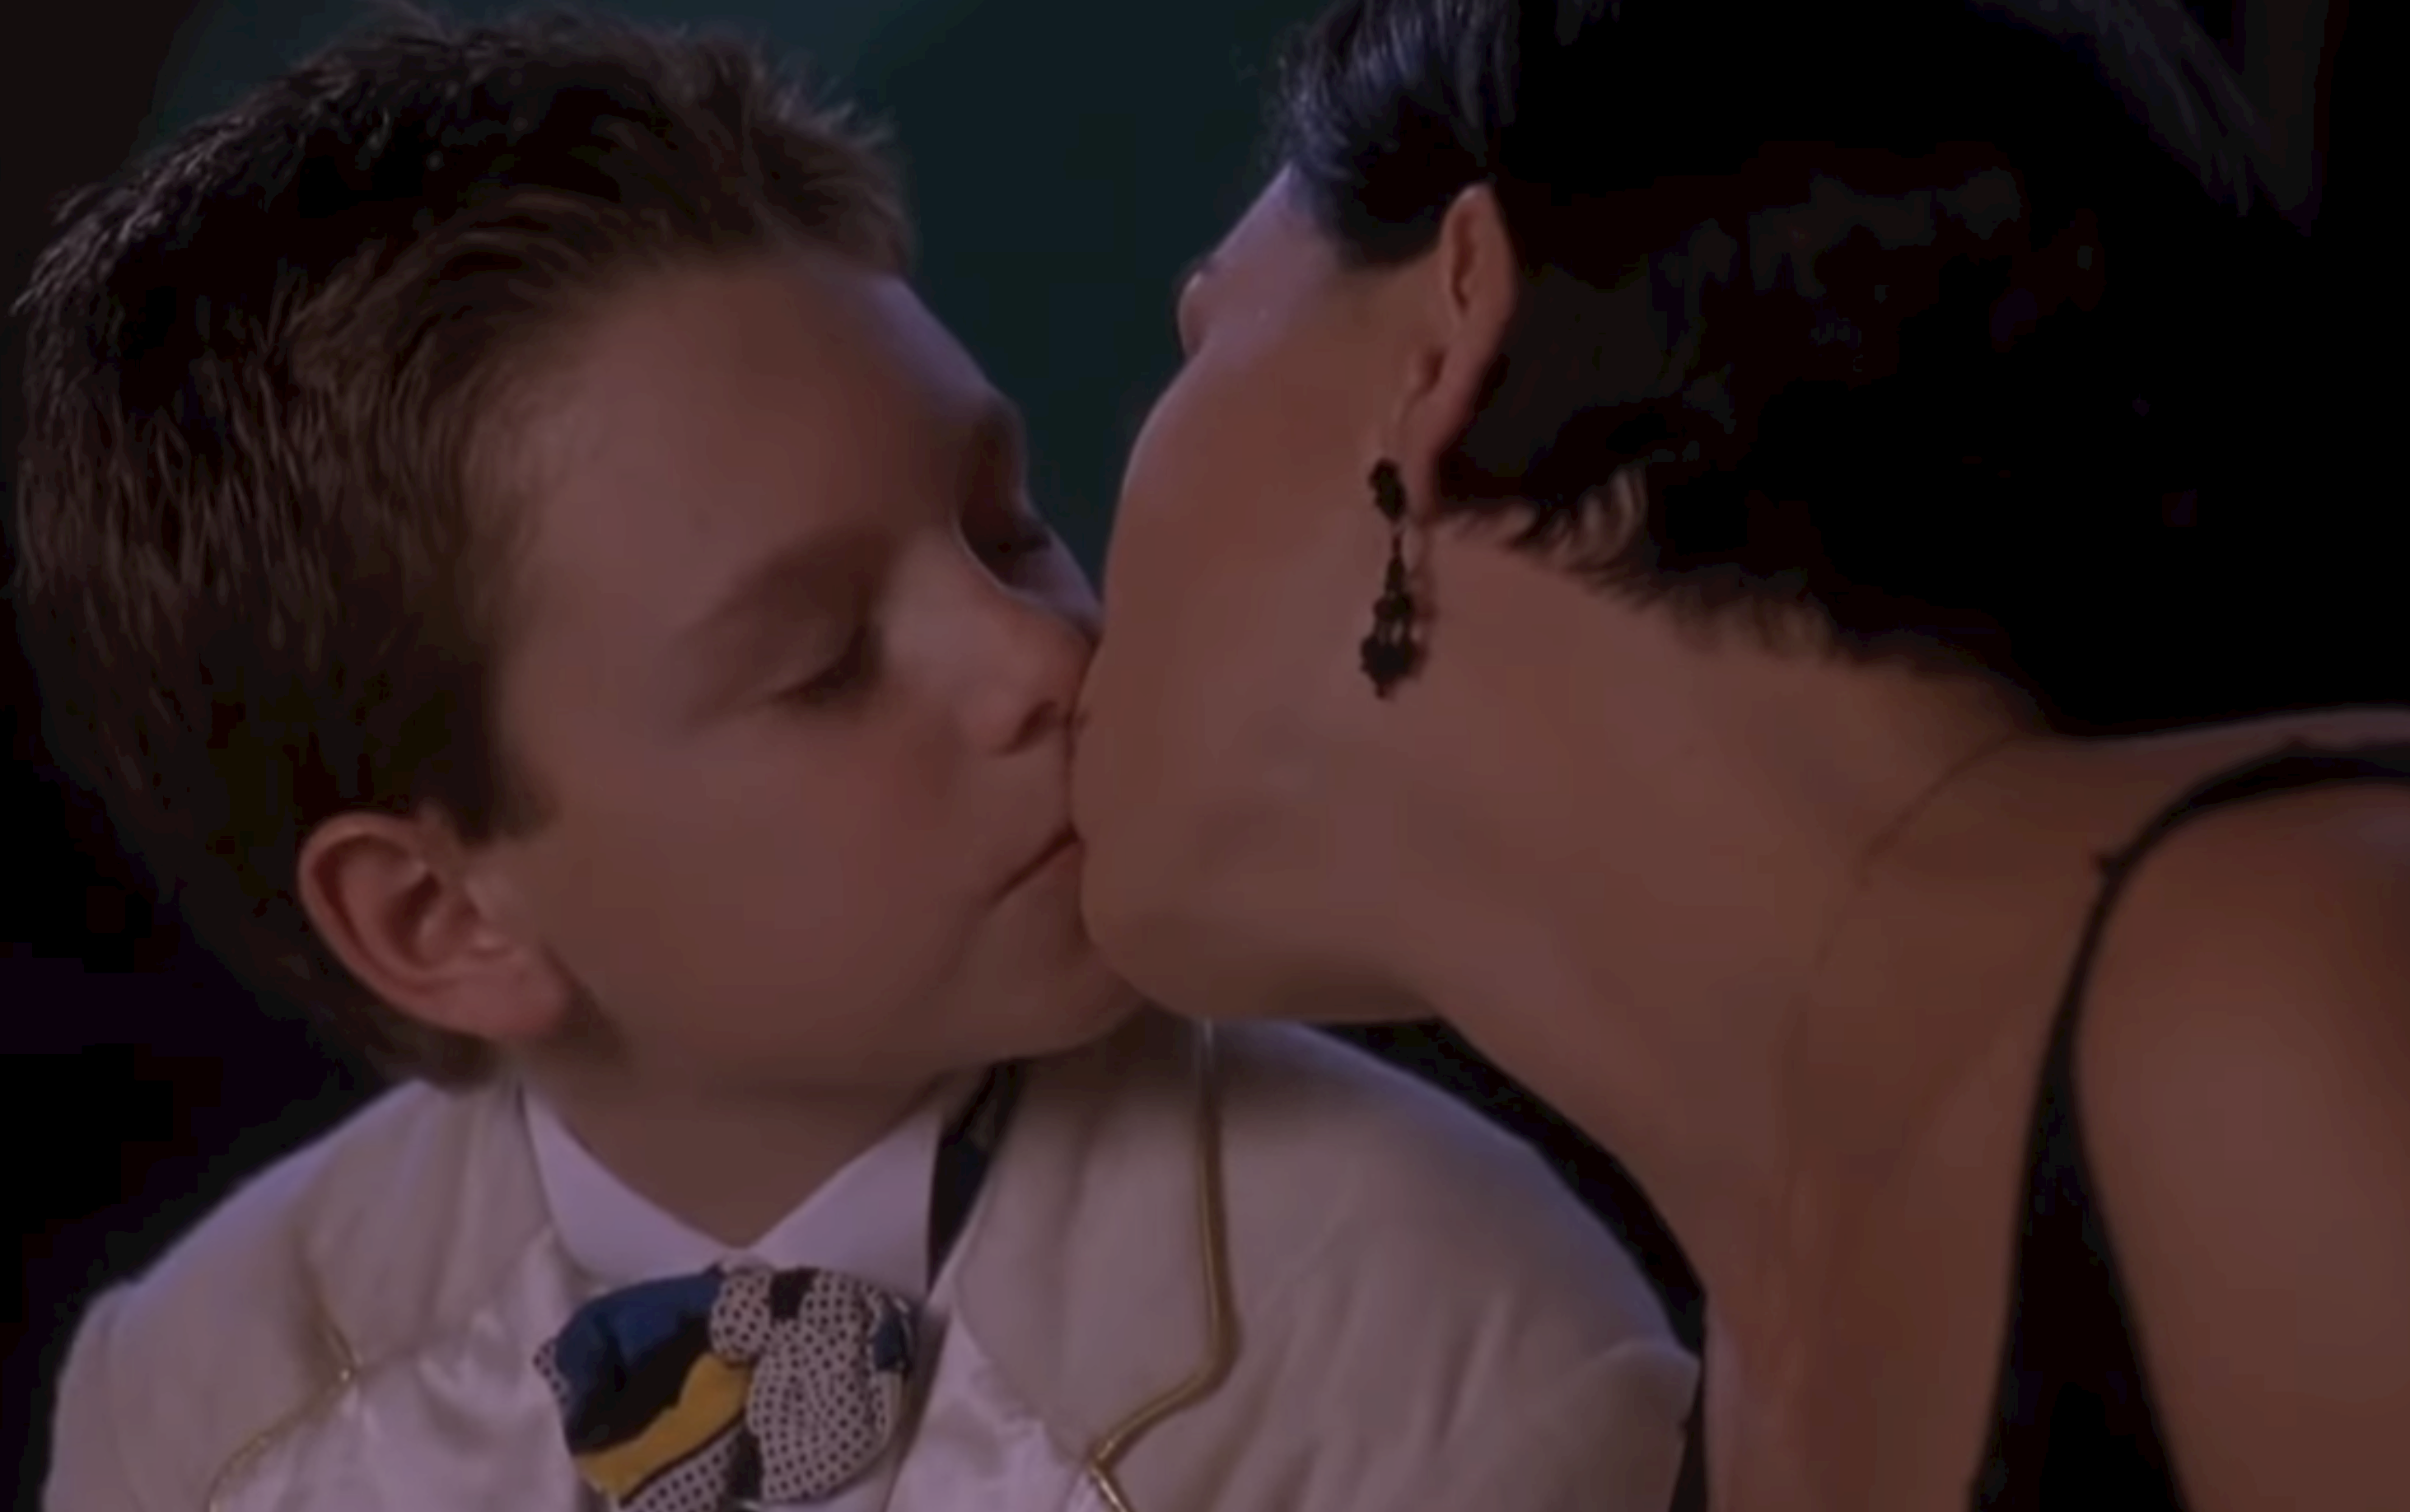 A little boy kissing a grown woman